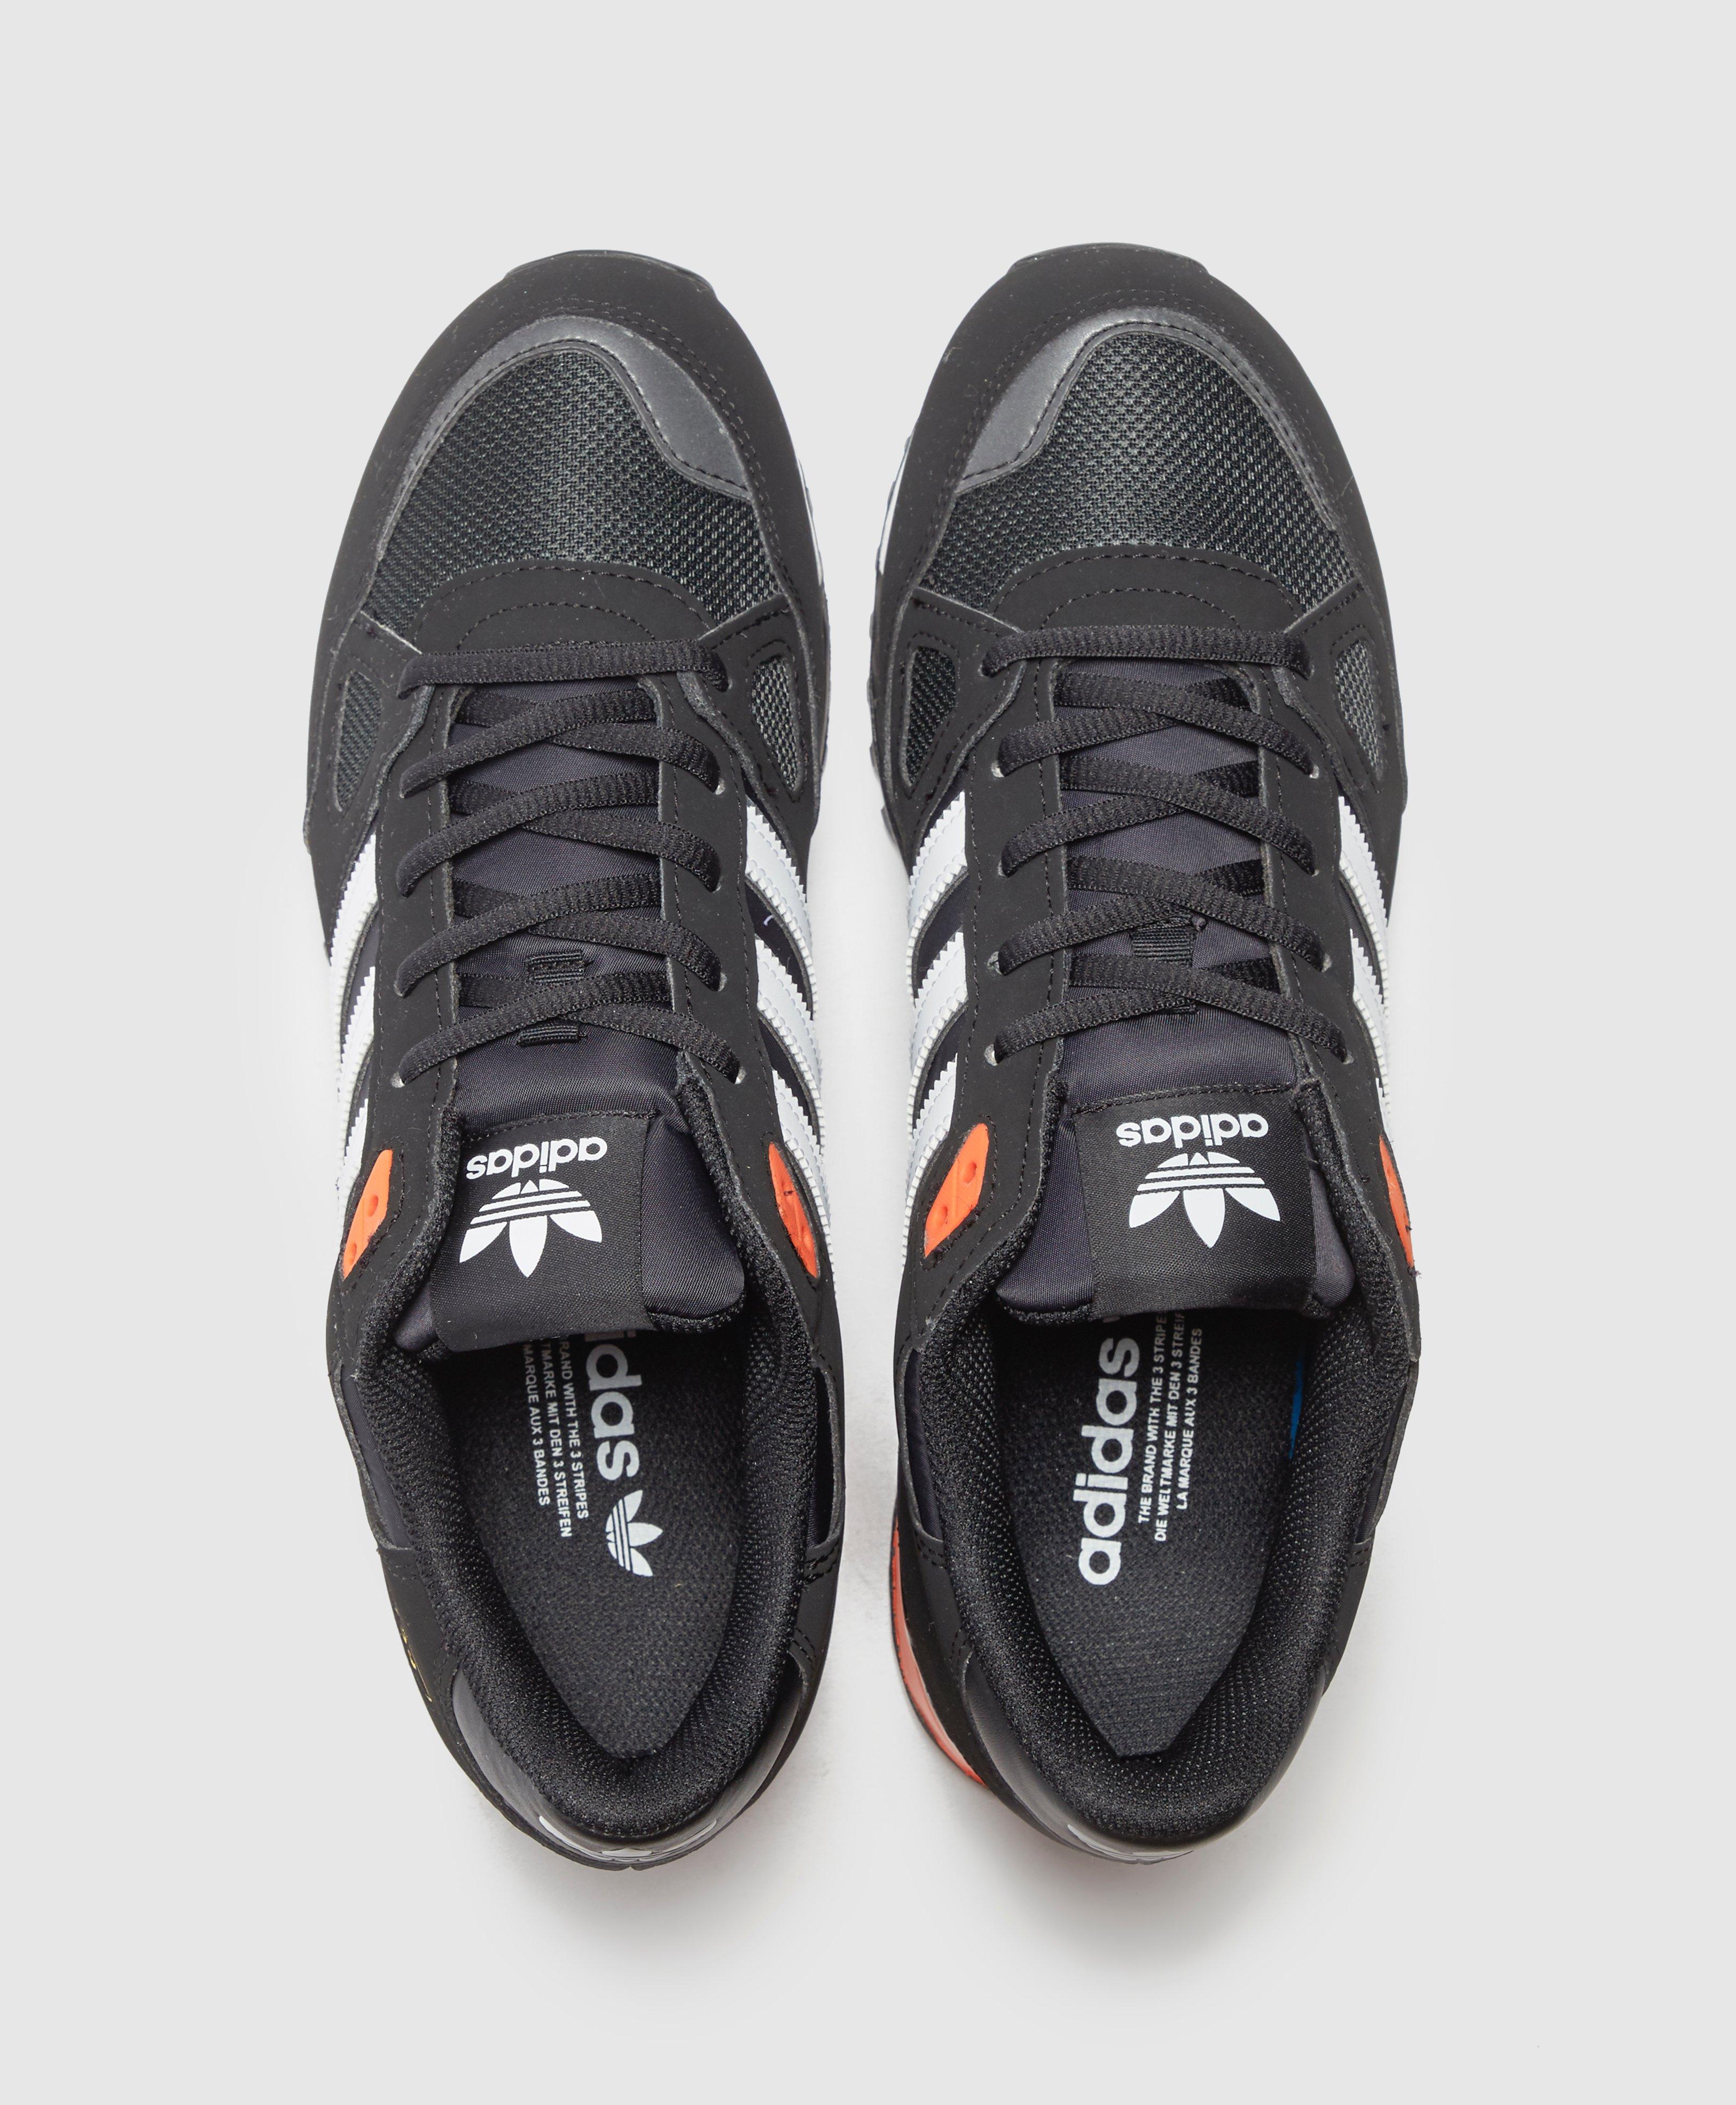 adidas zx750 black